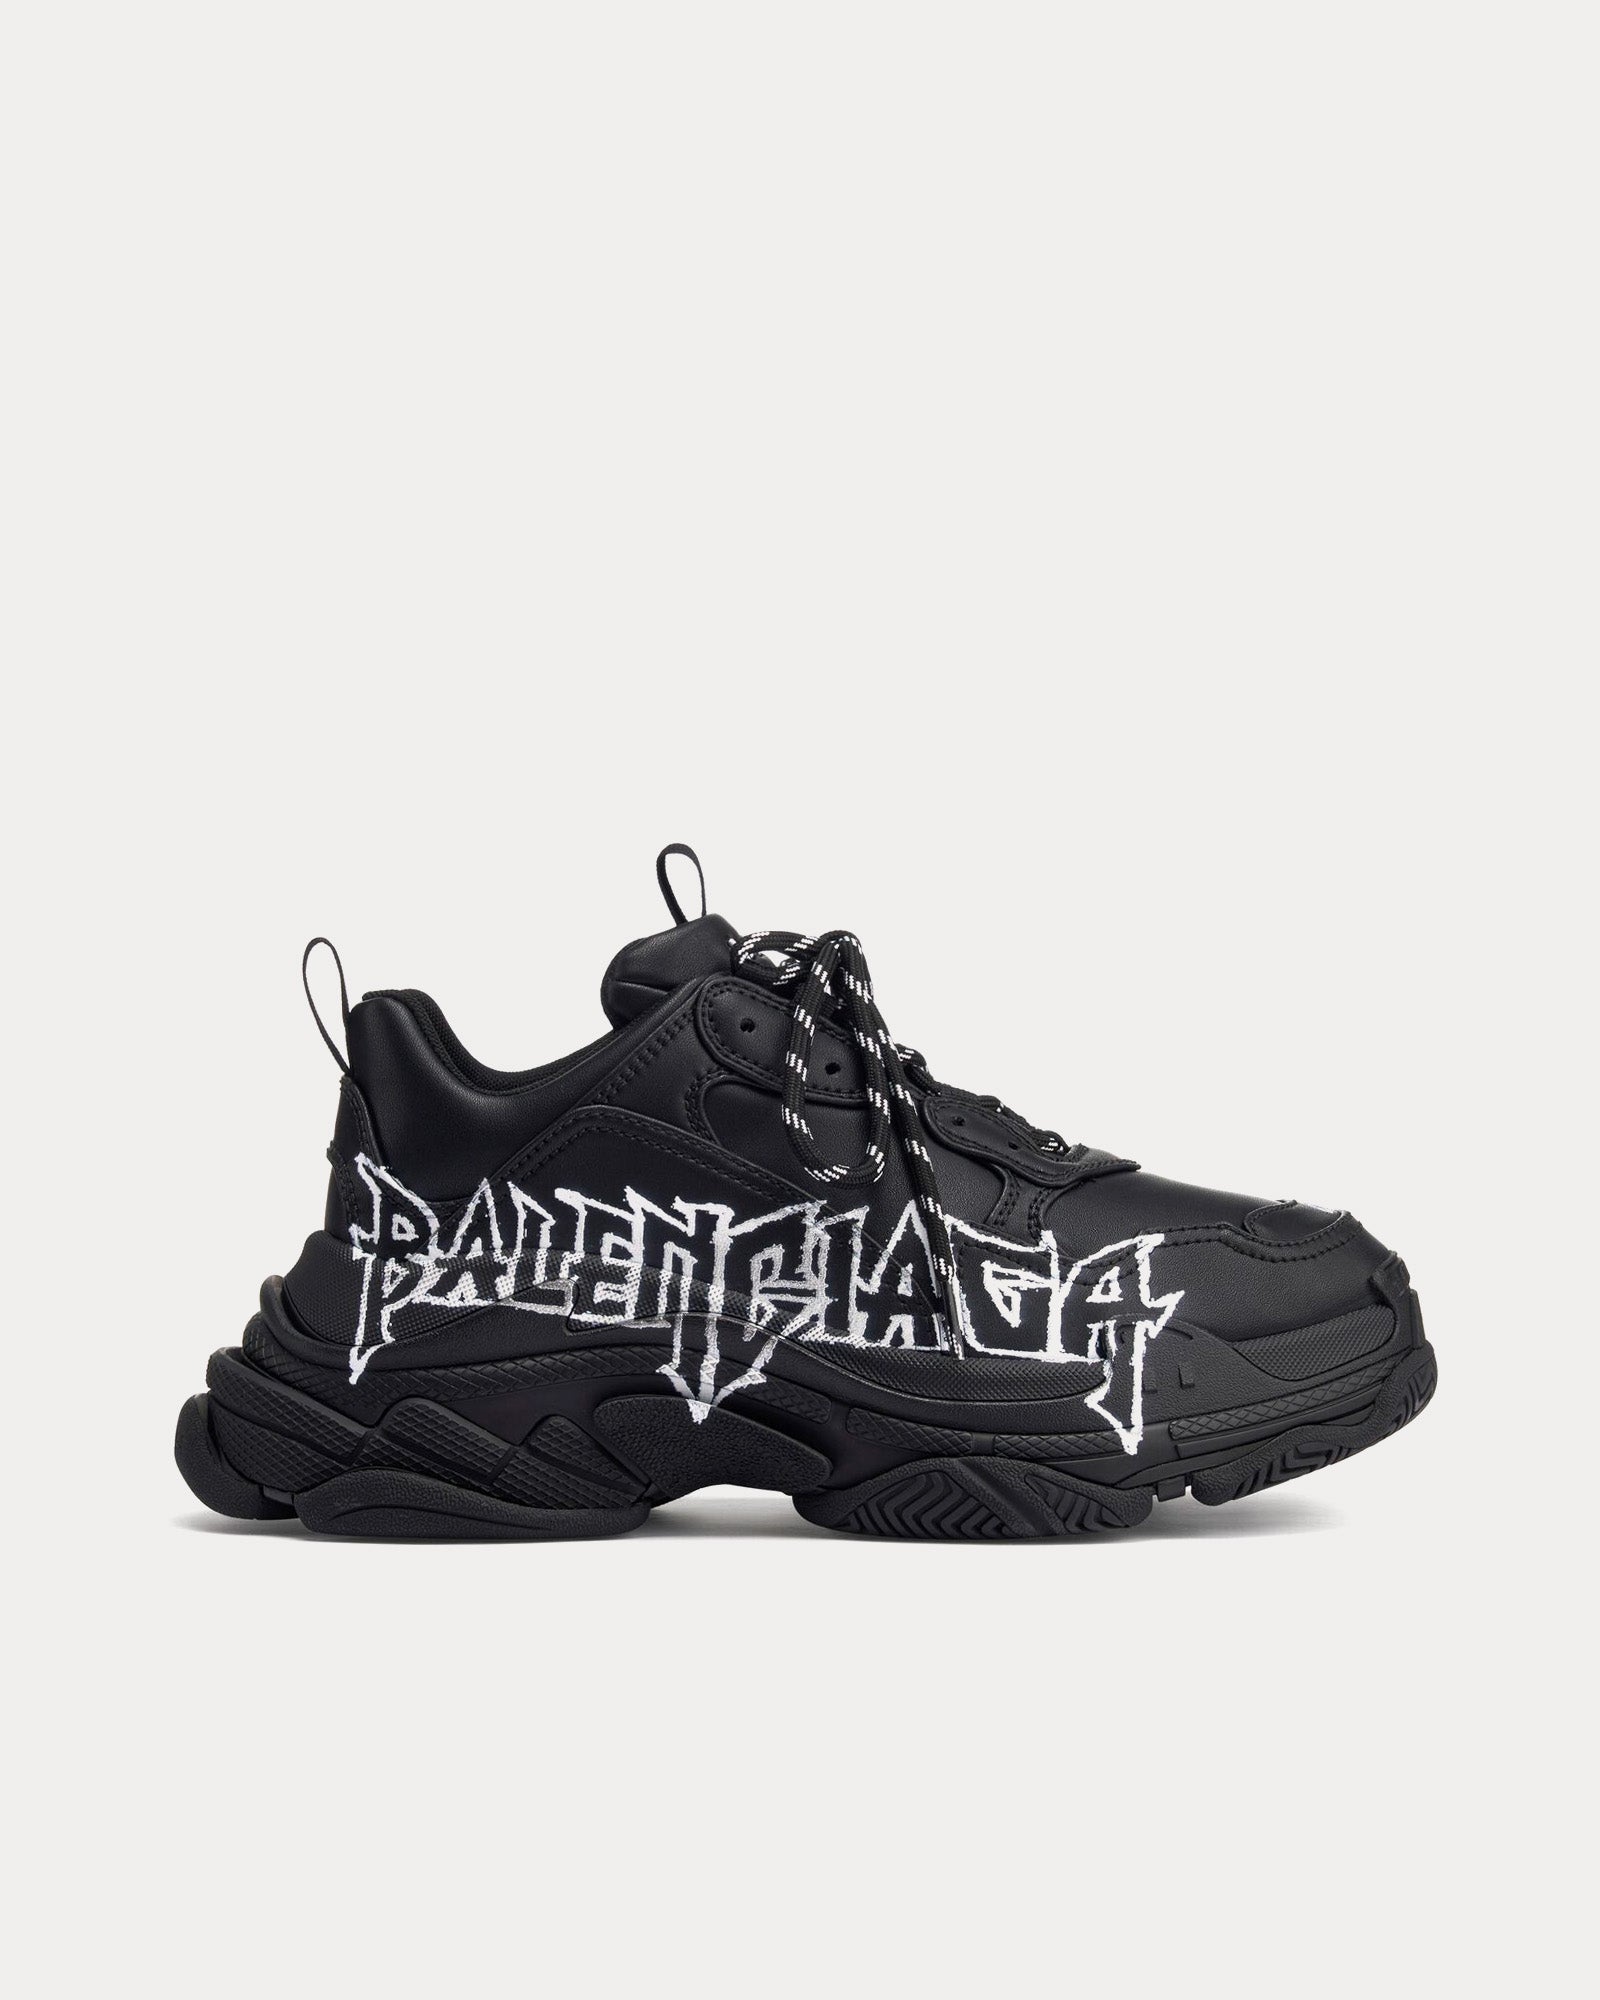 Balenciaga - Triple S DIY Metal Artwork Printed Cowskin Black / White Low Top Sneakers